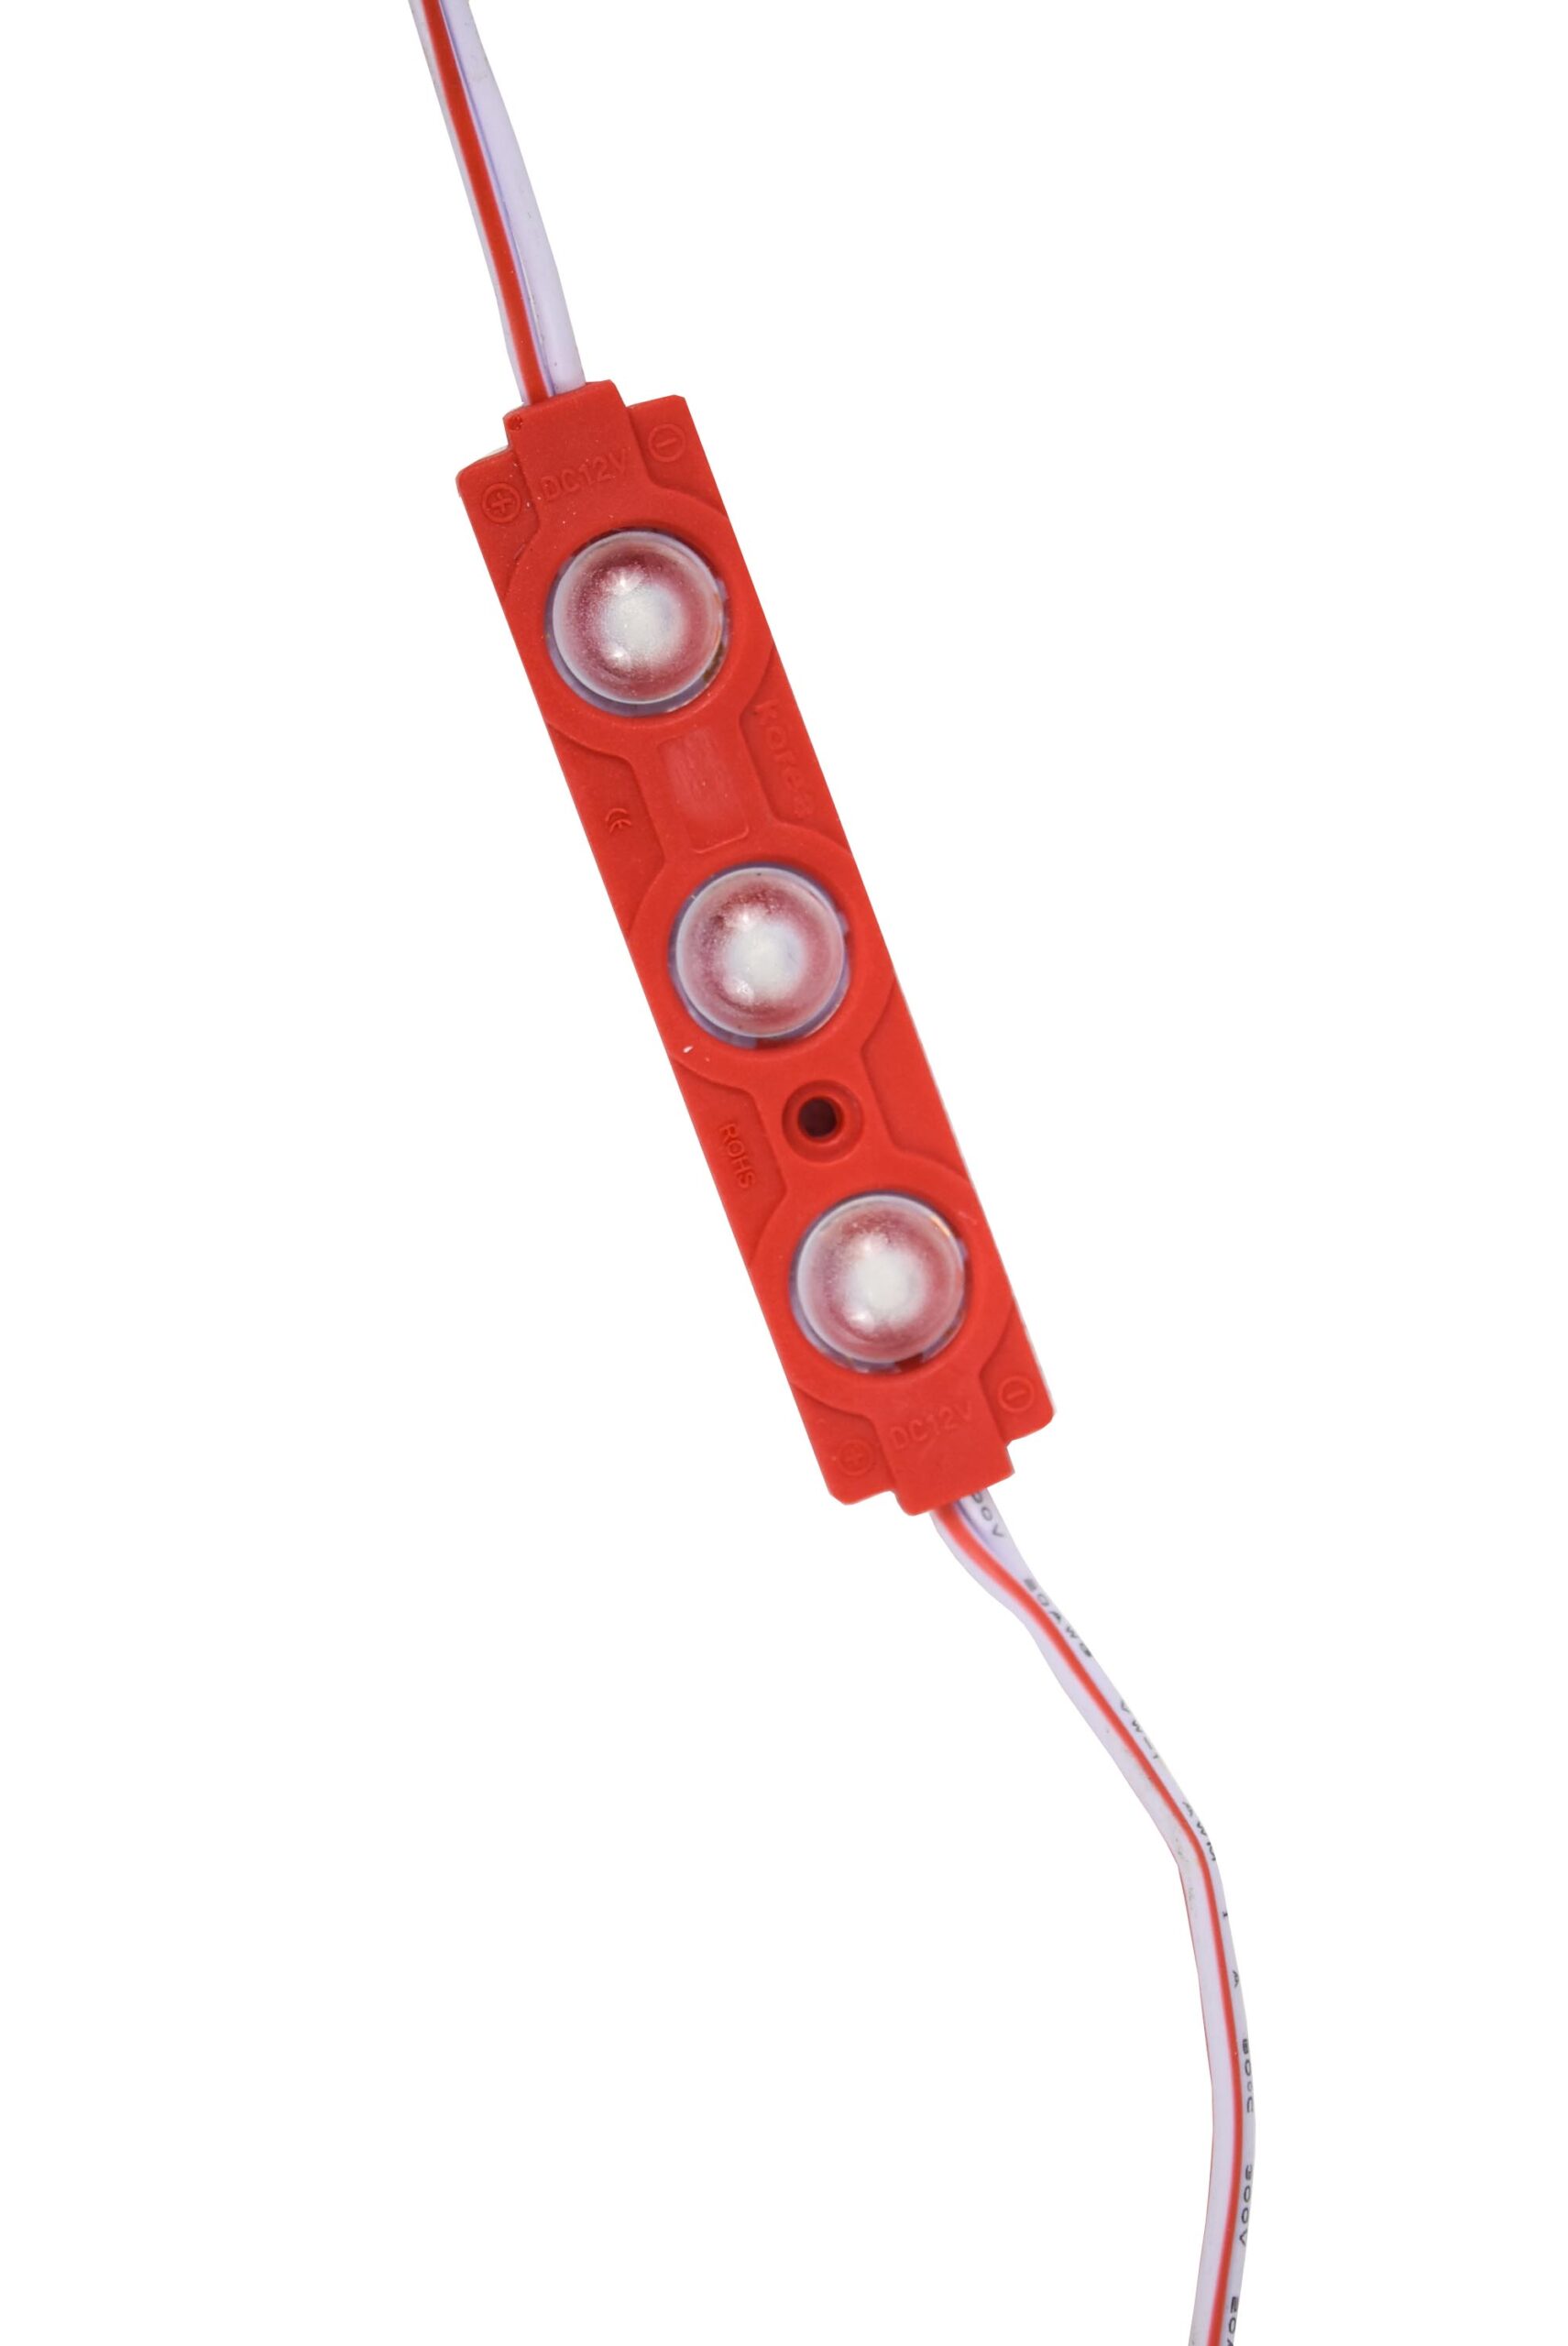 3pcs LEDs Red Module SMD5730 12V 0.72watts/60mA, 110Lum., IP67